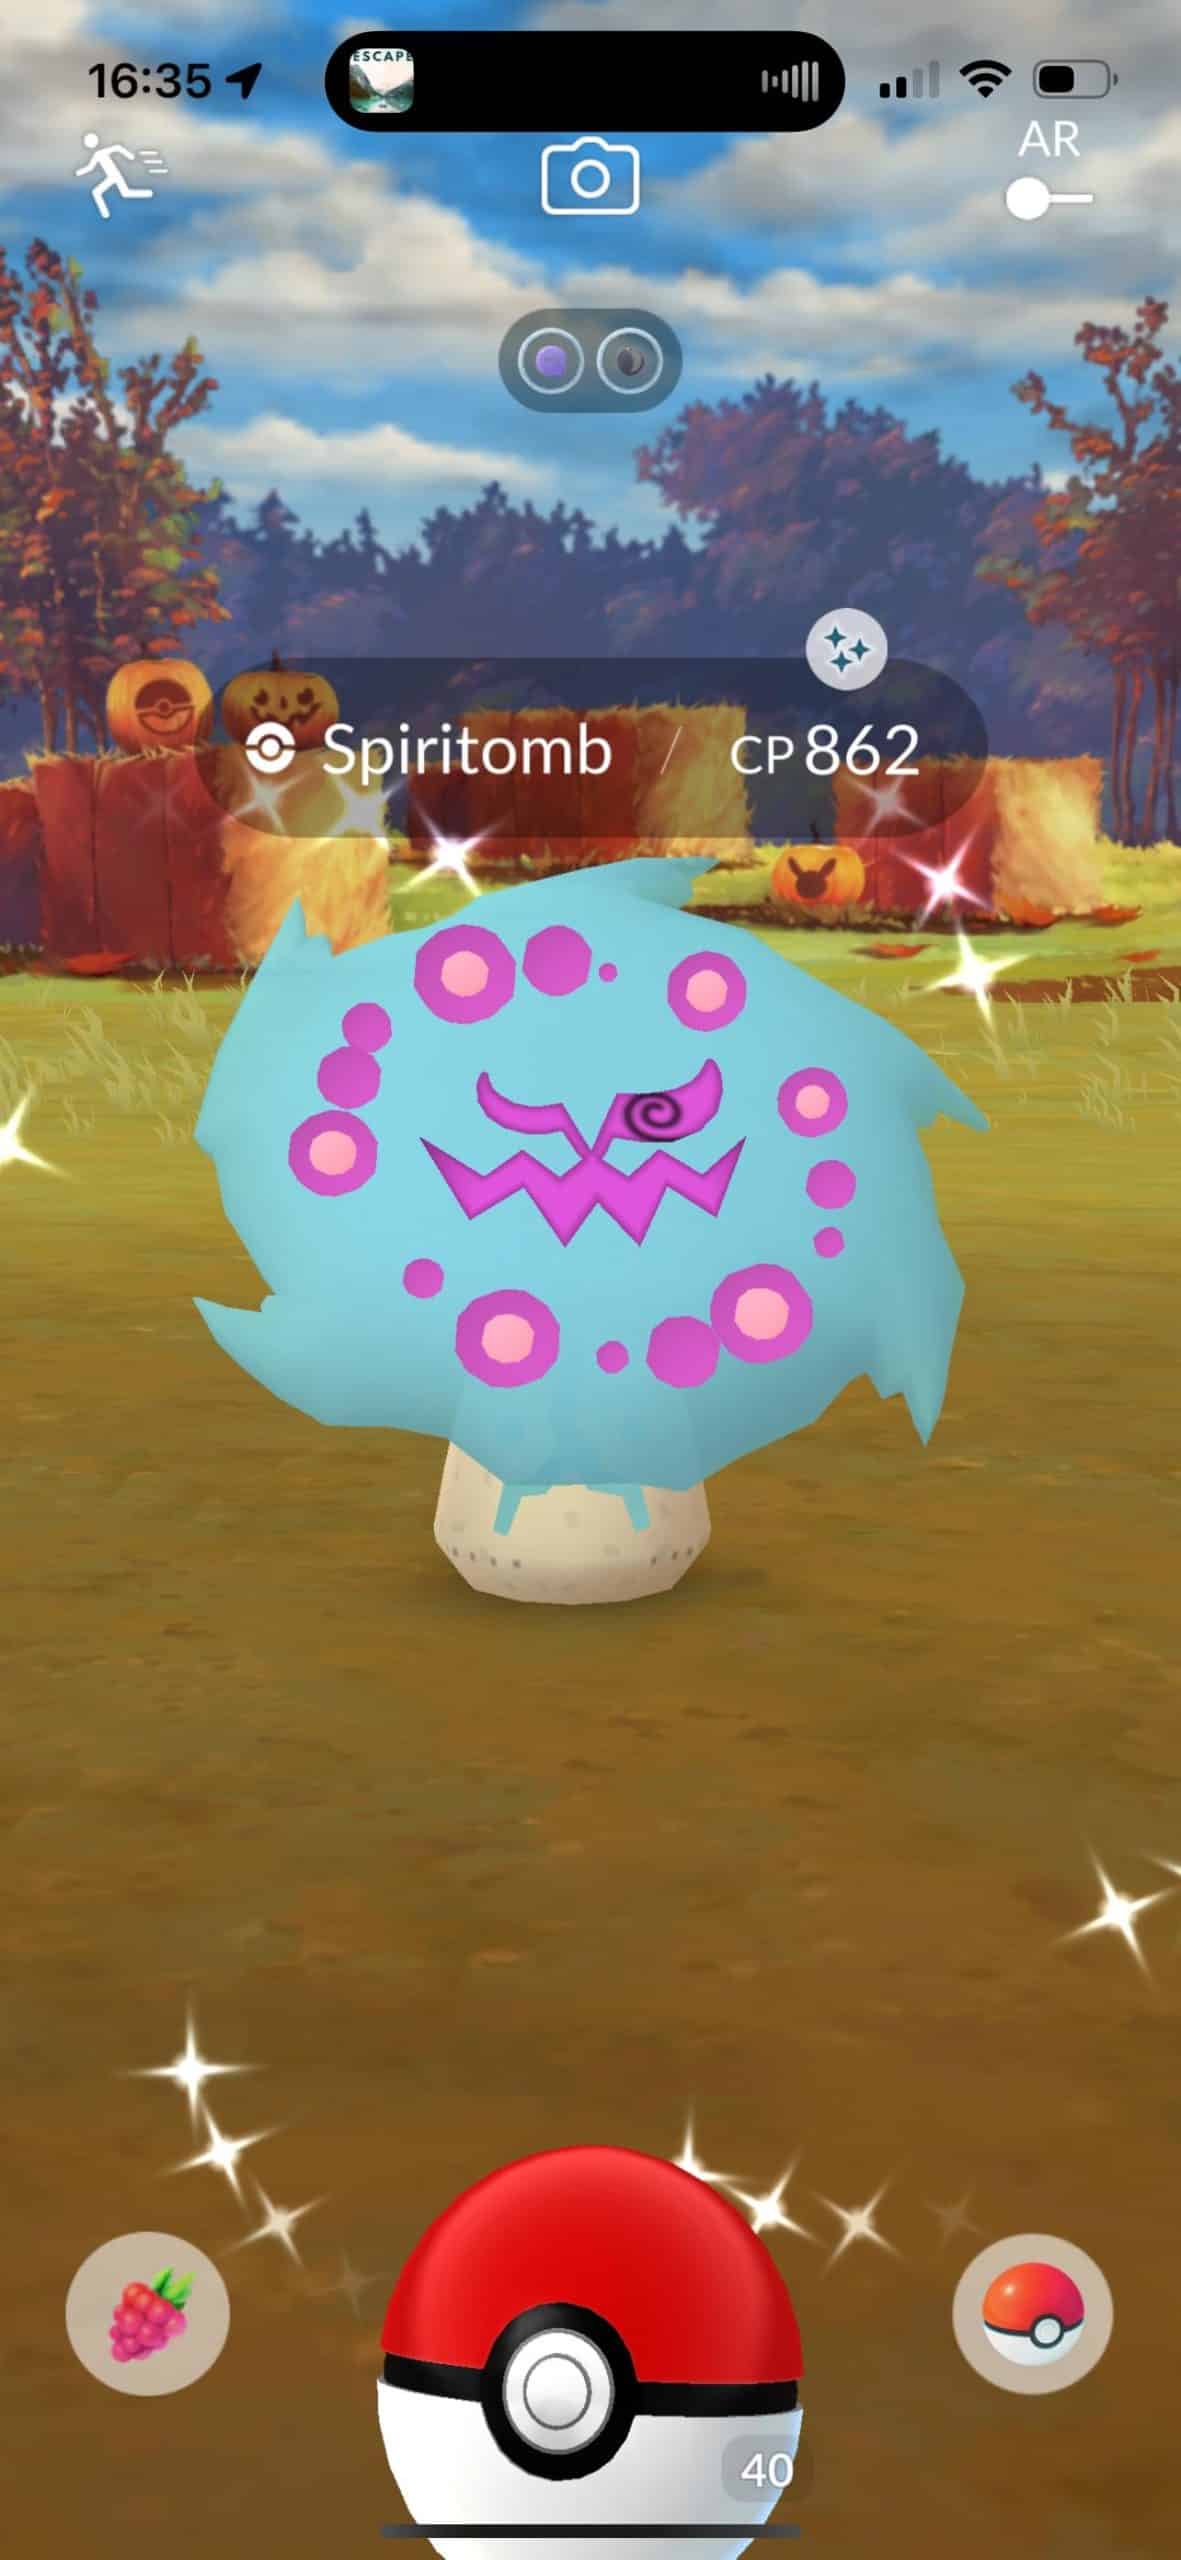 Pokemon Go Spiritomb Shiny: How To Catch Shiny Spiritomb in Halloween Event?